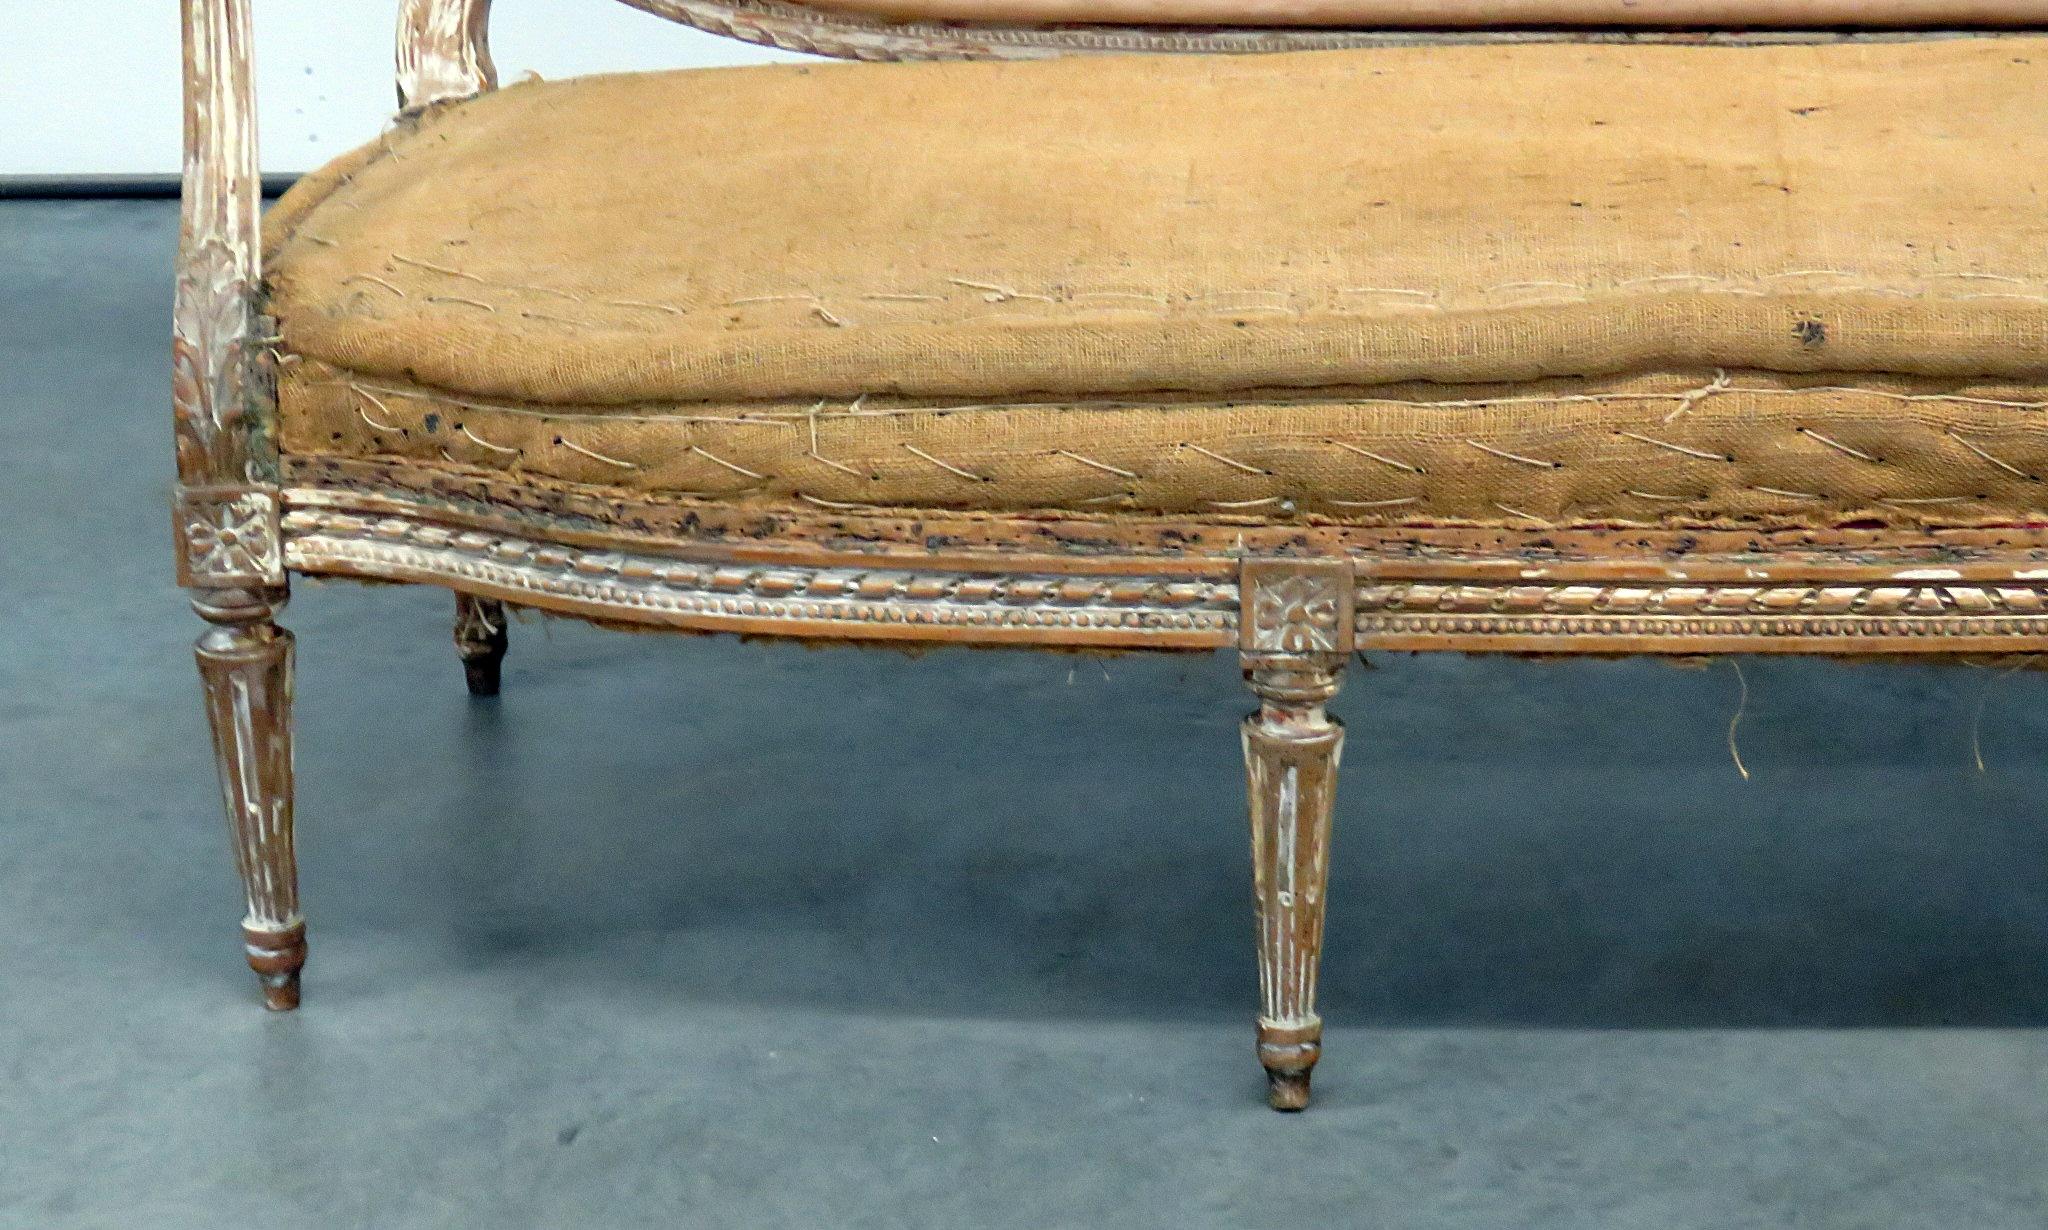 Antique Louis XVI style distressed painted sofa.